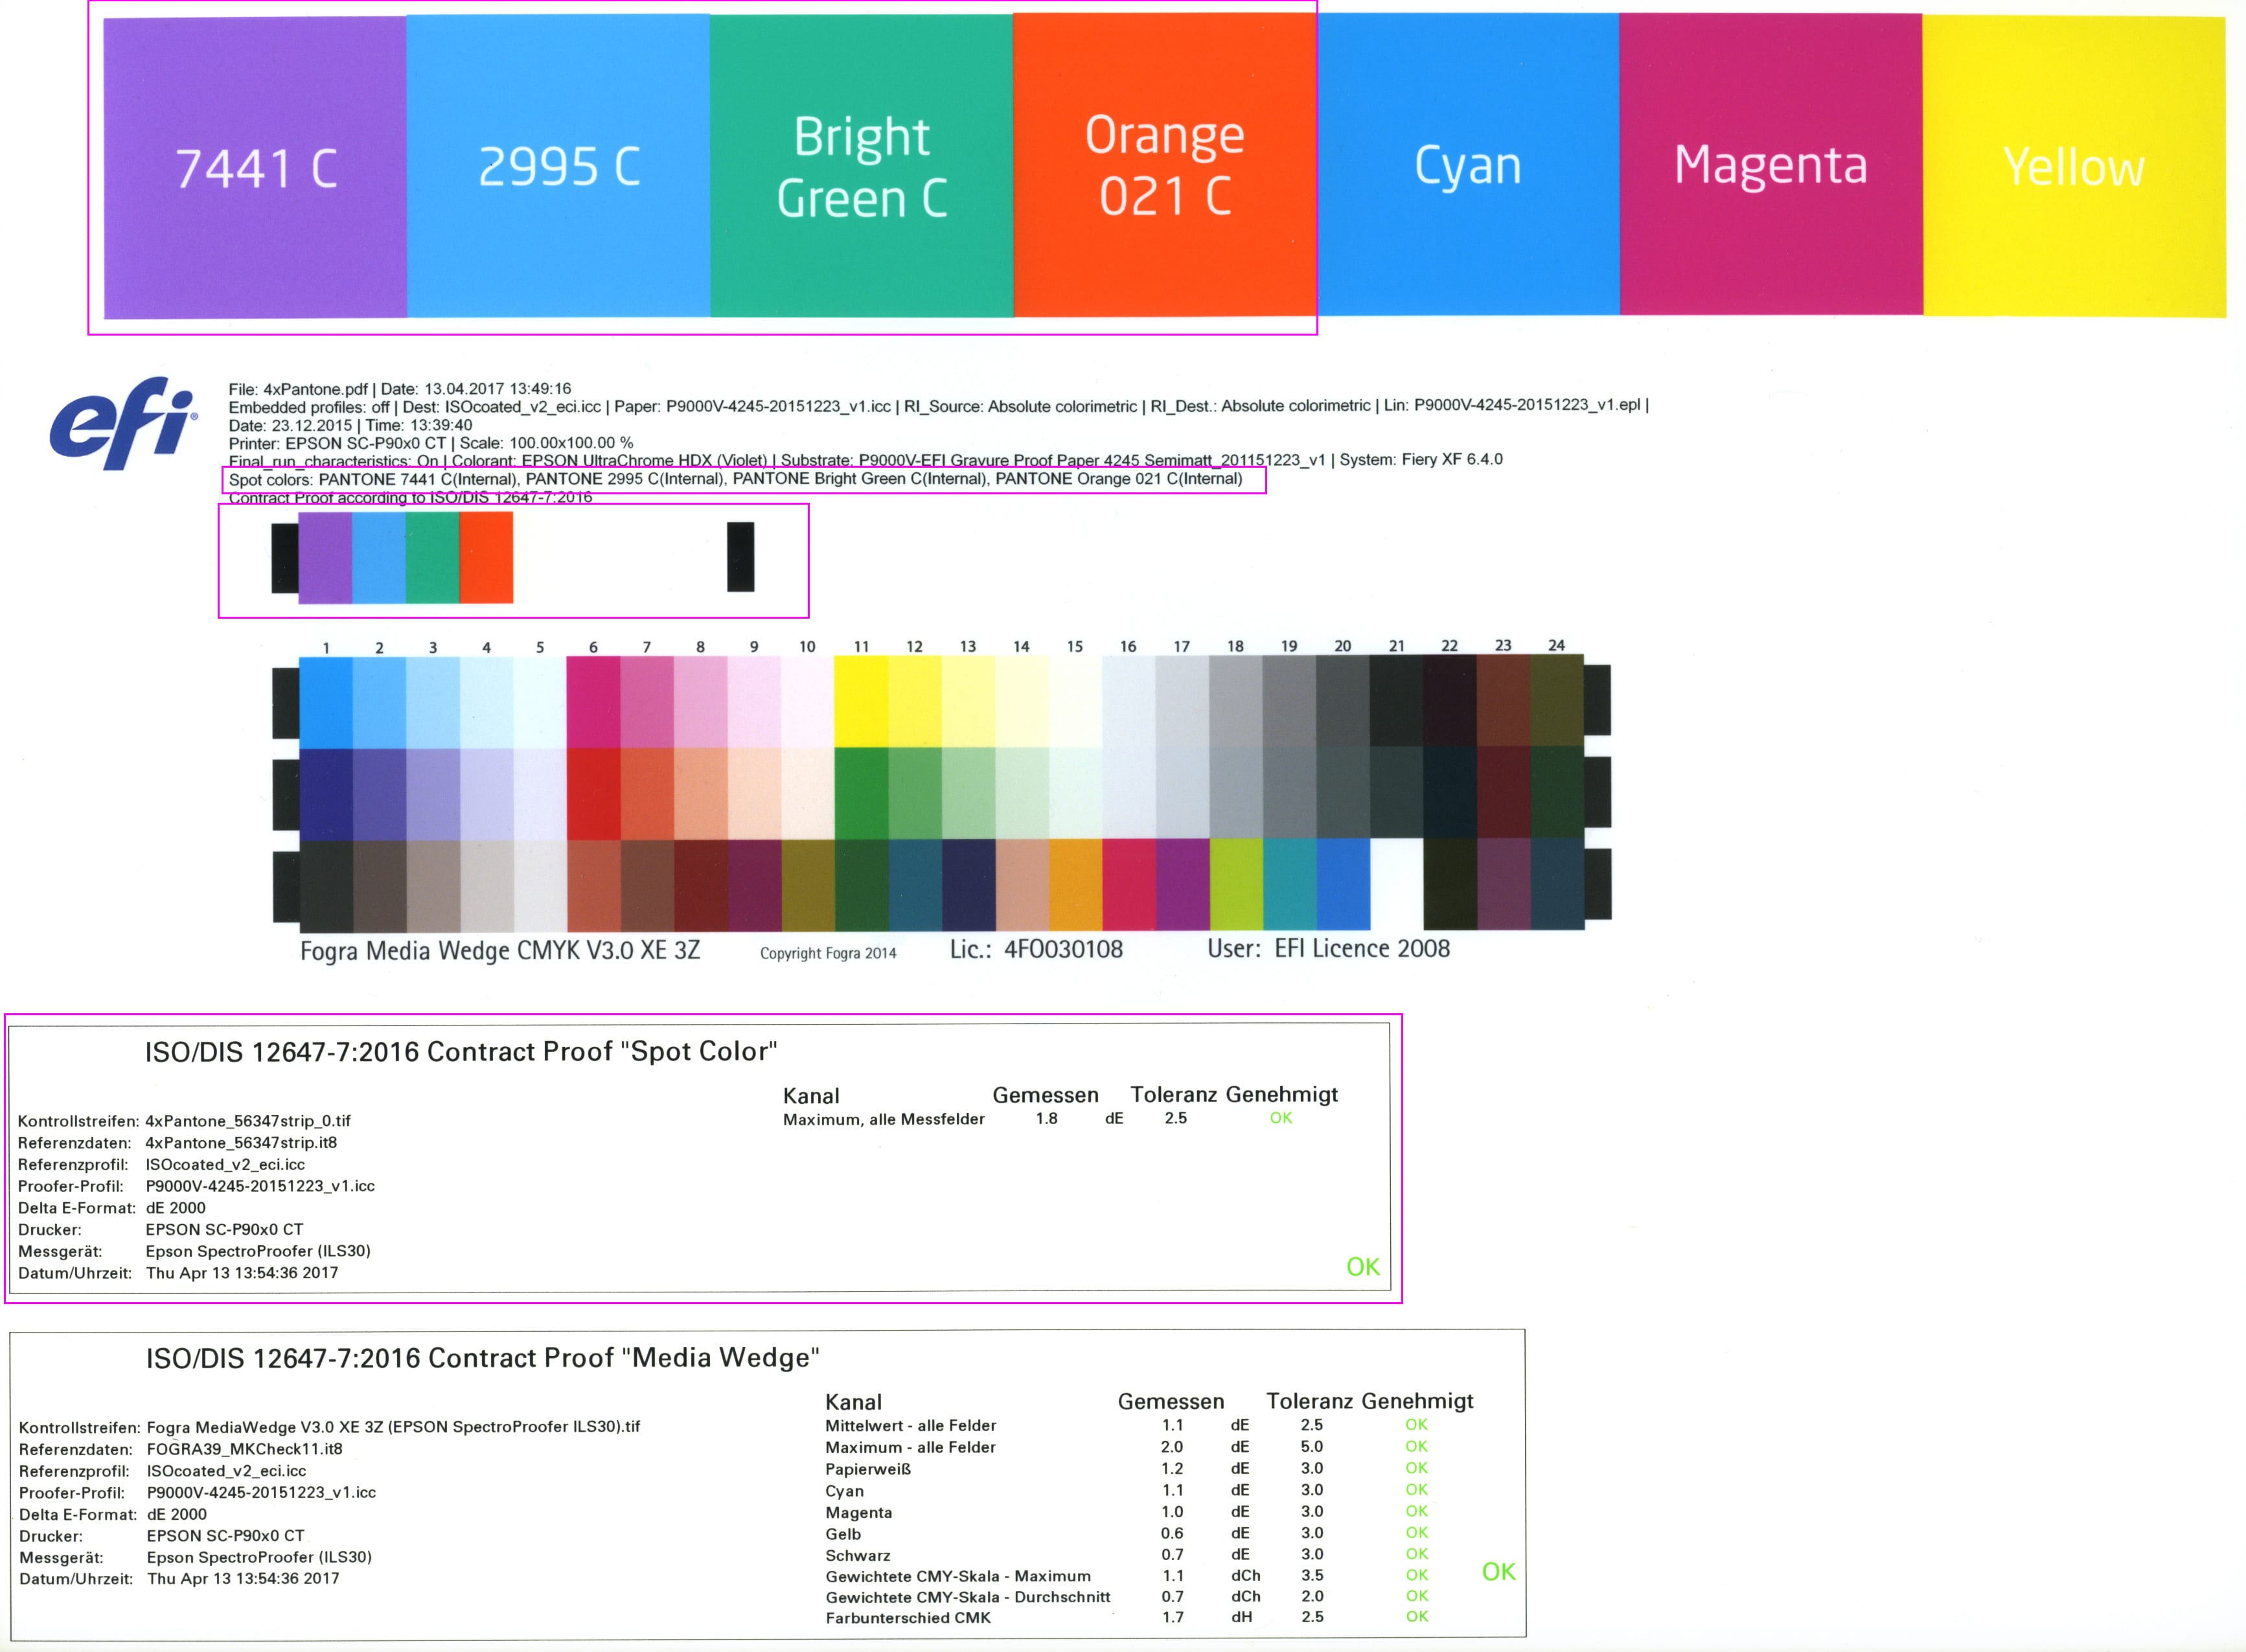 proof.de: Spotcolor mediawedge / spot color media wedge s vyhodnocením podle ISO/DIS 12647-7:2016